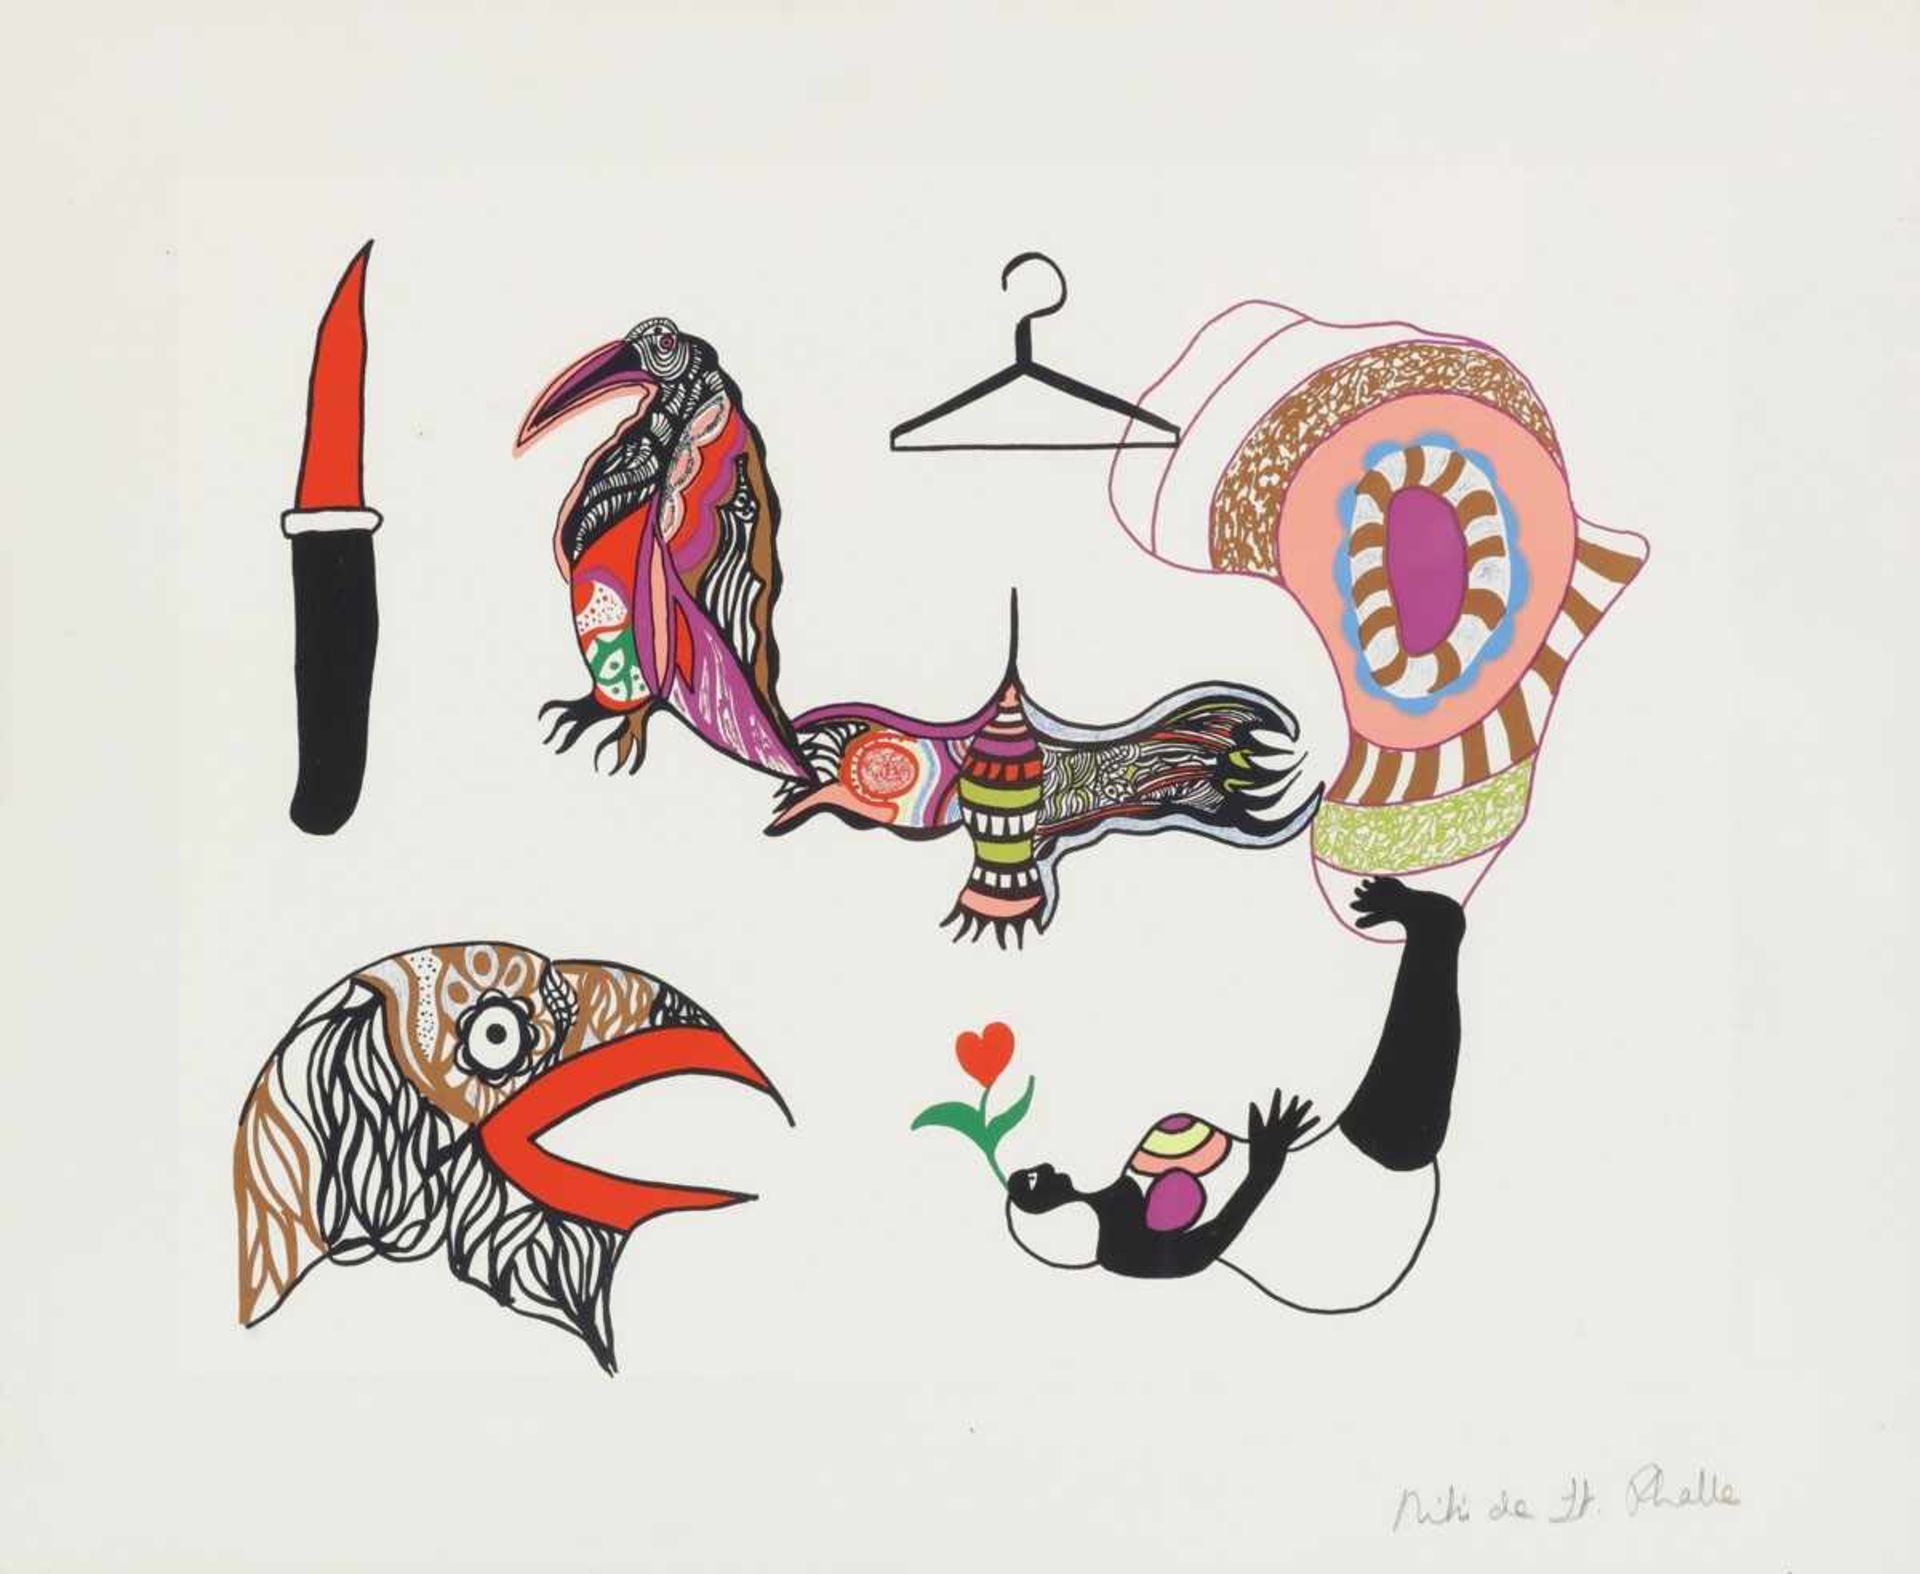 Niki de Saint Phalle1930 Neuilly-sur-Seine - 2002 San Diego - "Afrika" - Farbserigrafie/Papier. 32 x